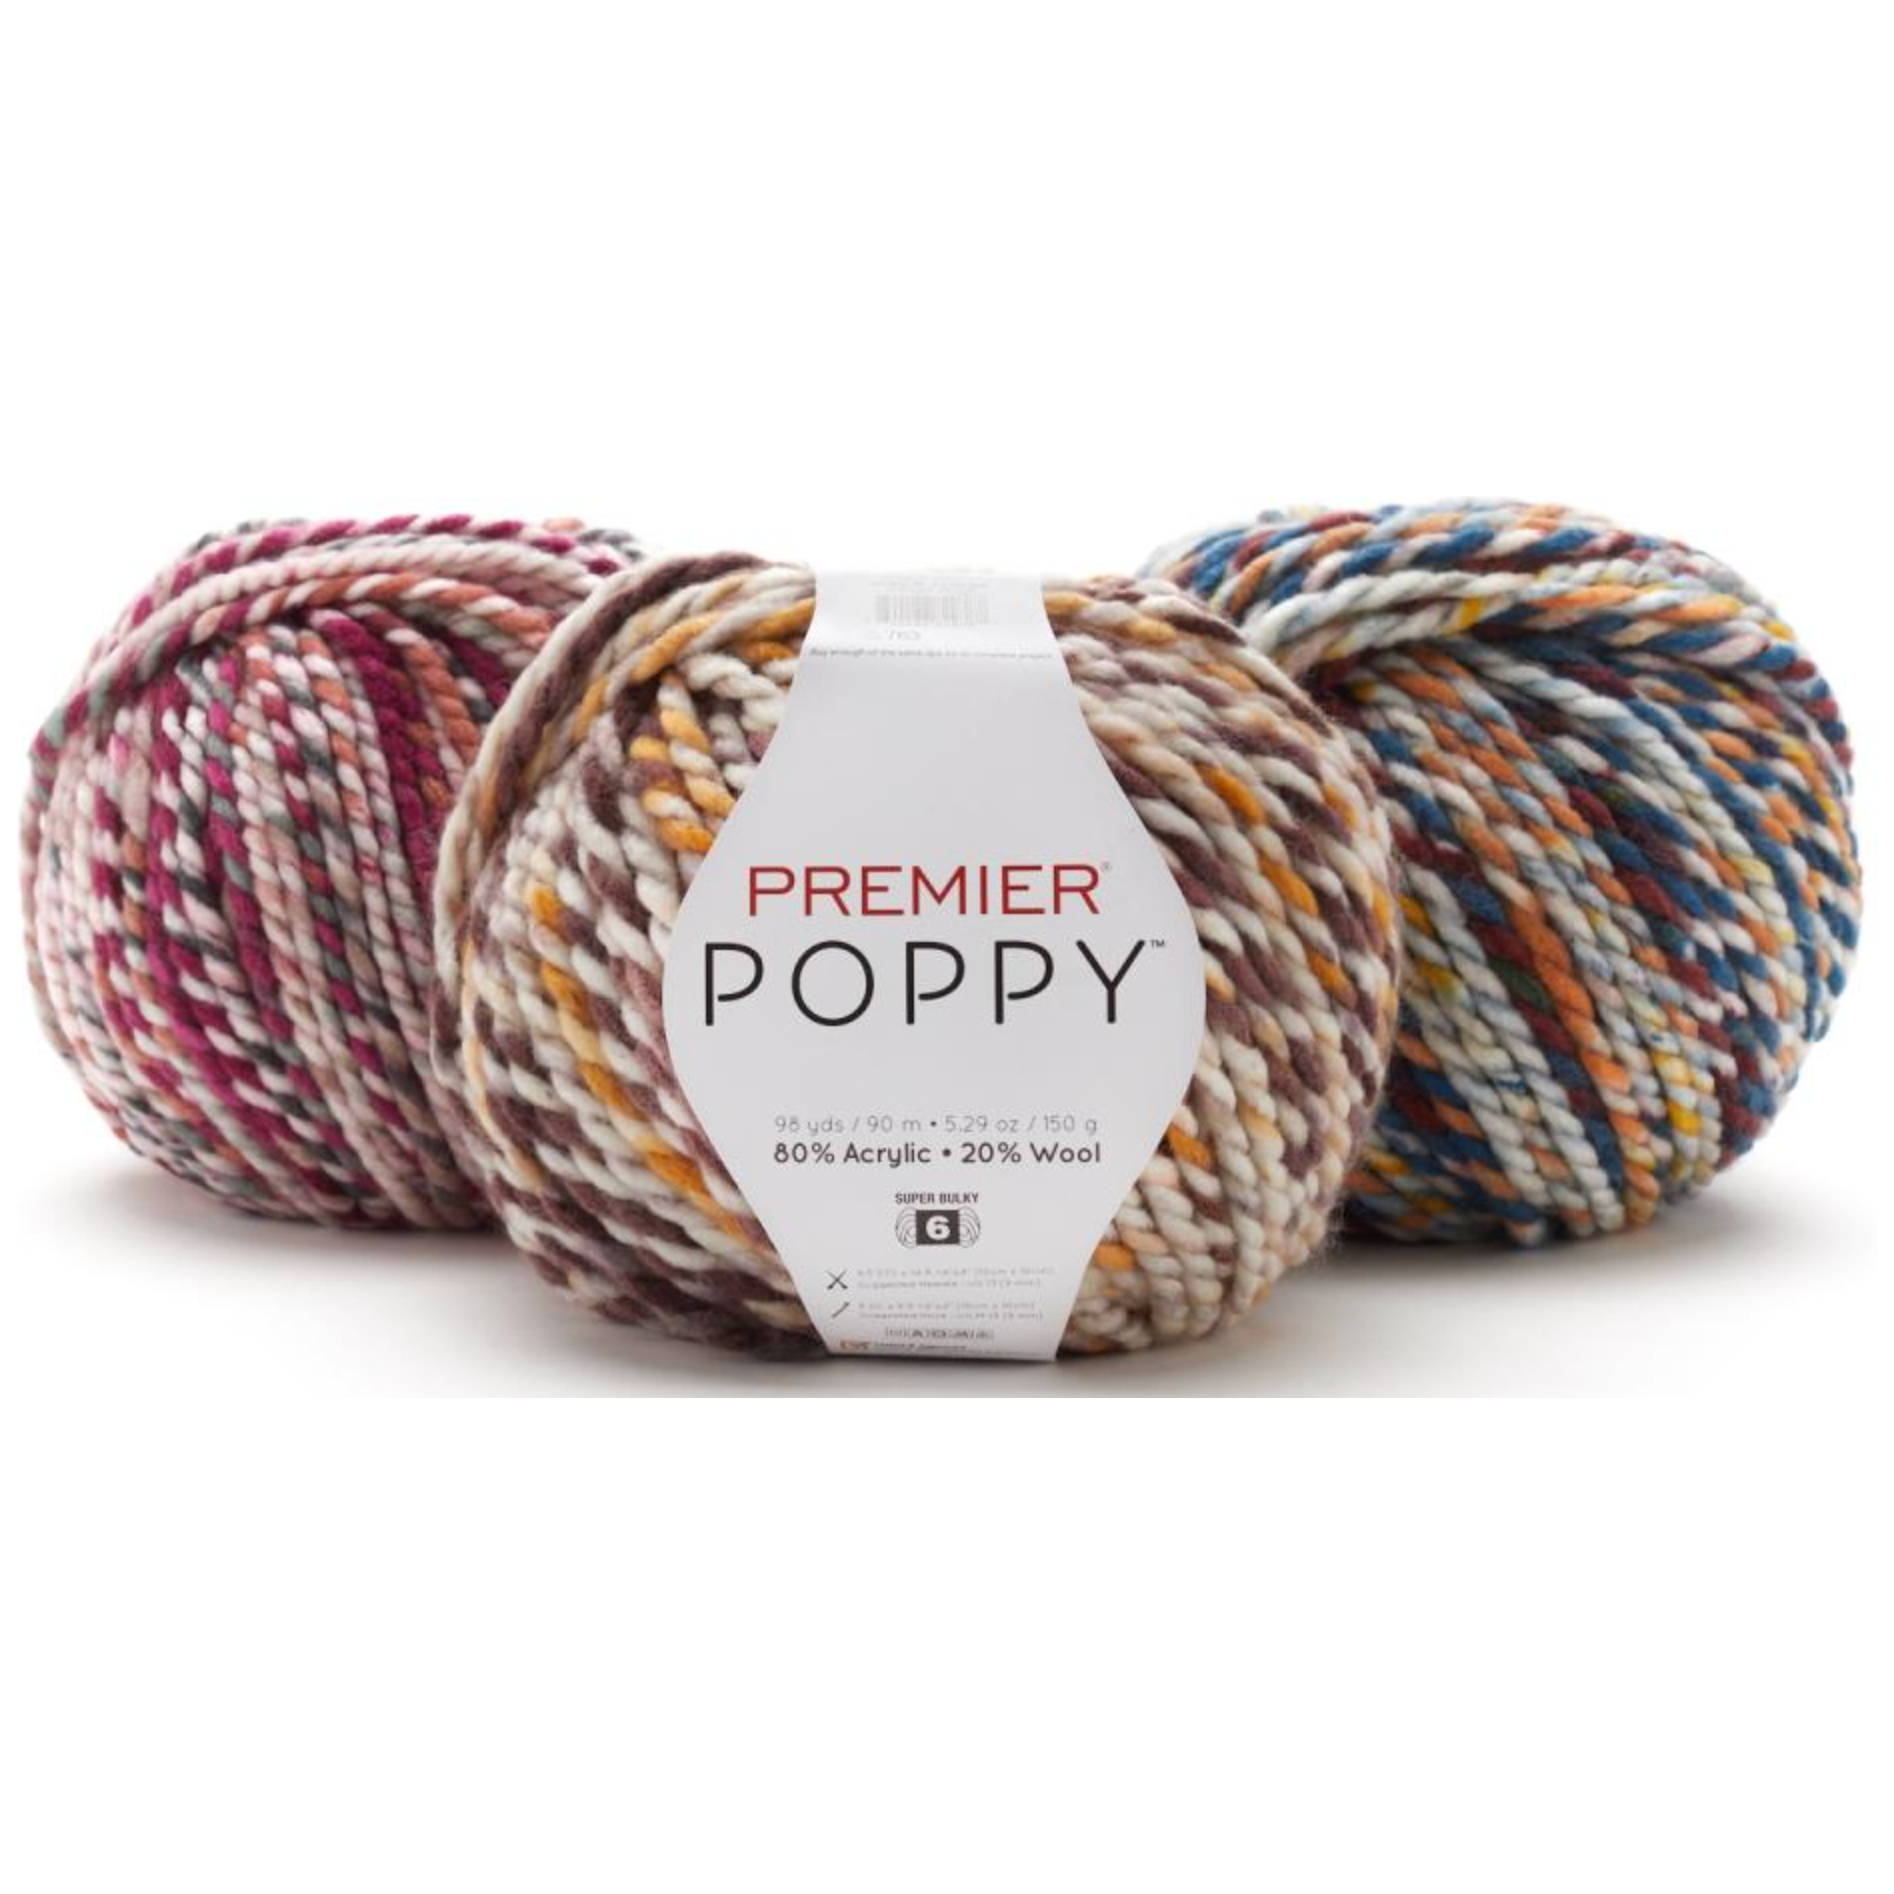 Premier Poppy Yarn Sold As A 3 Pack